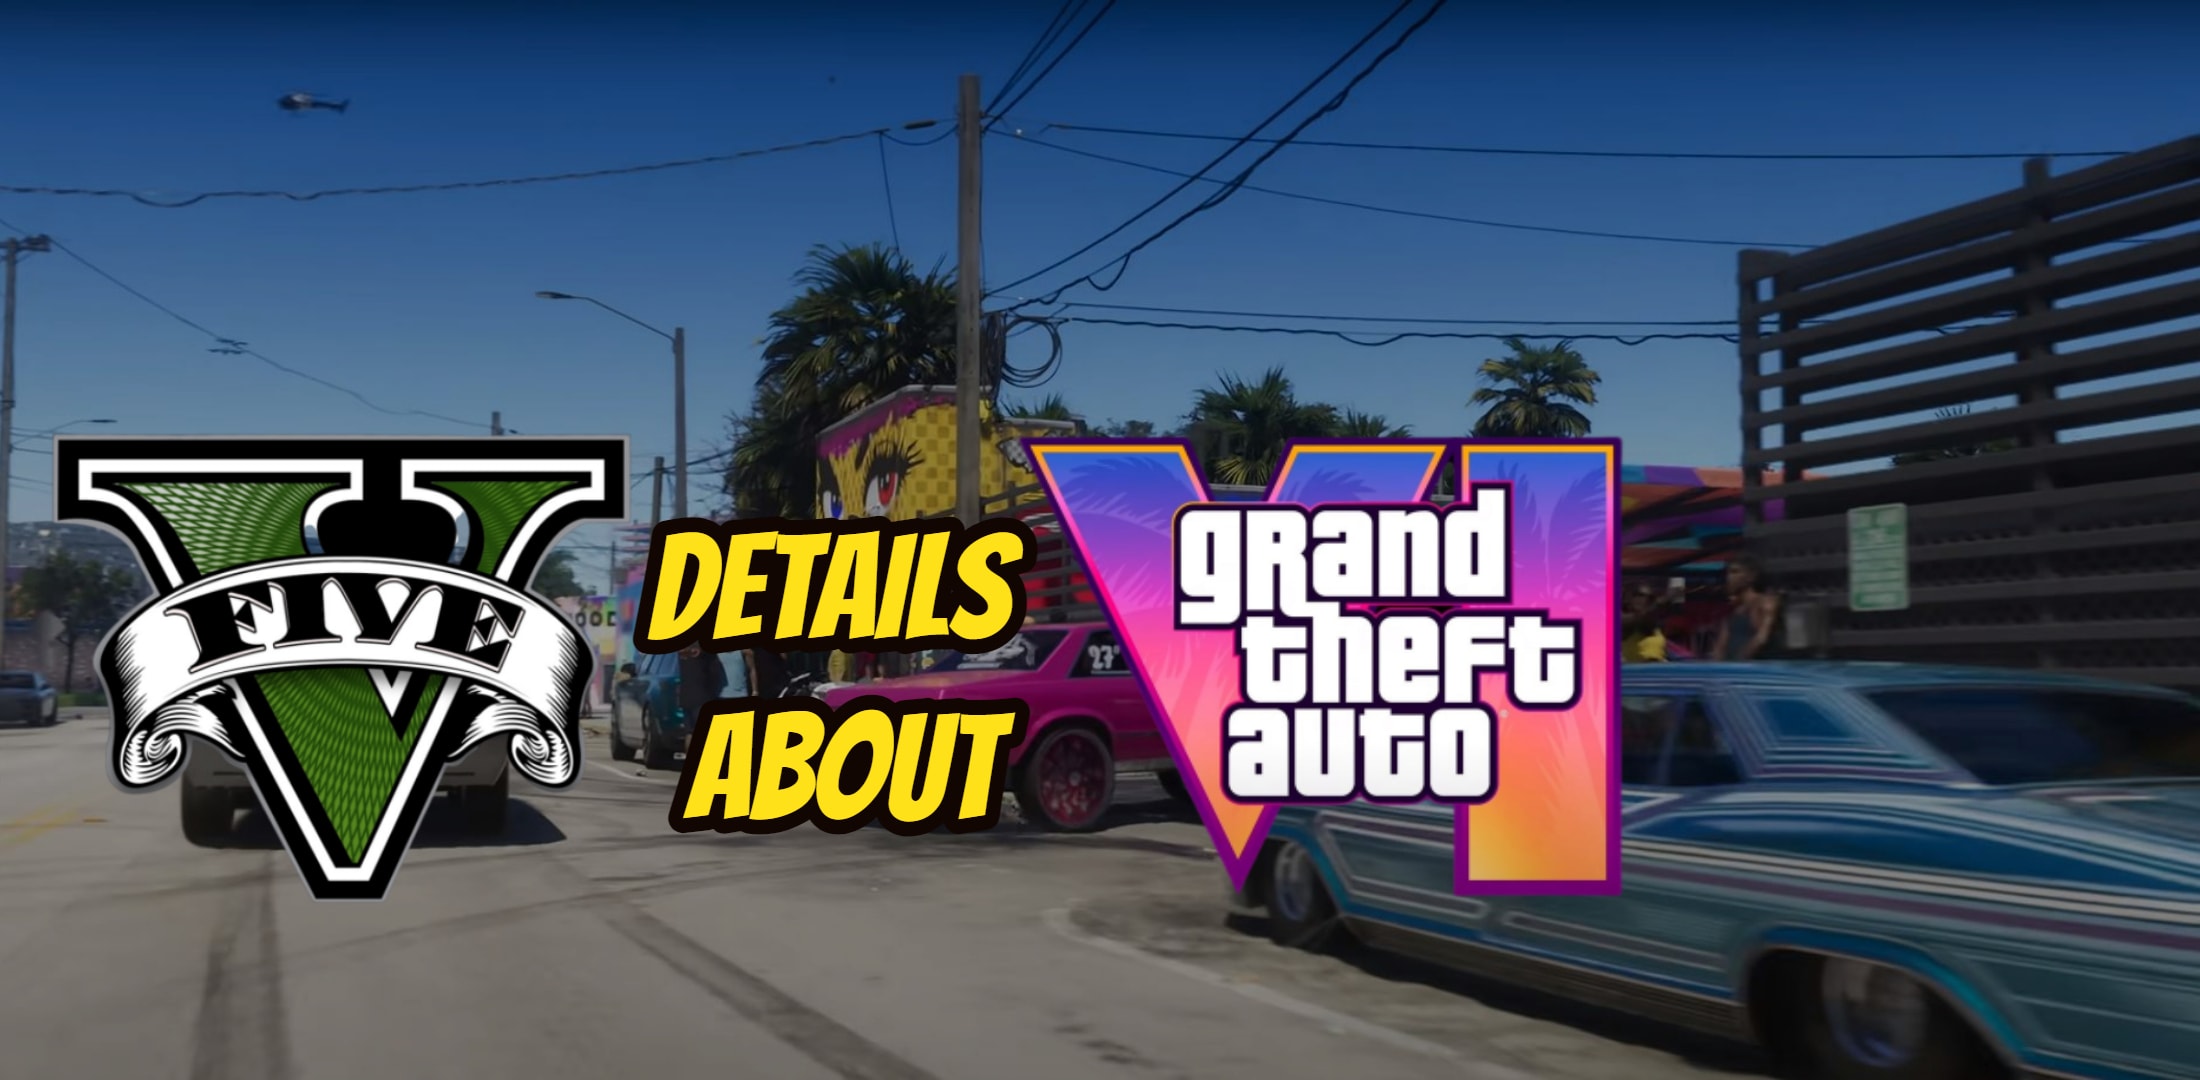 Google Maps meets 'Grand Theft Auto' - CNET